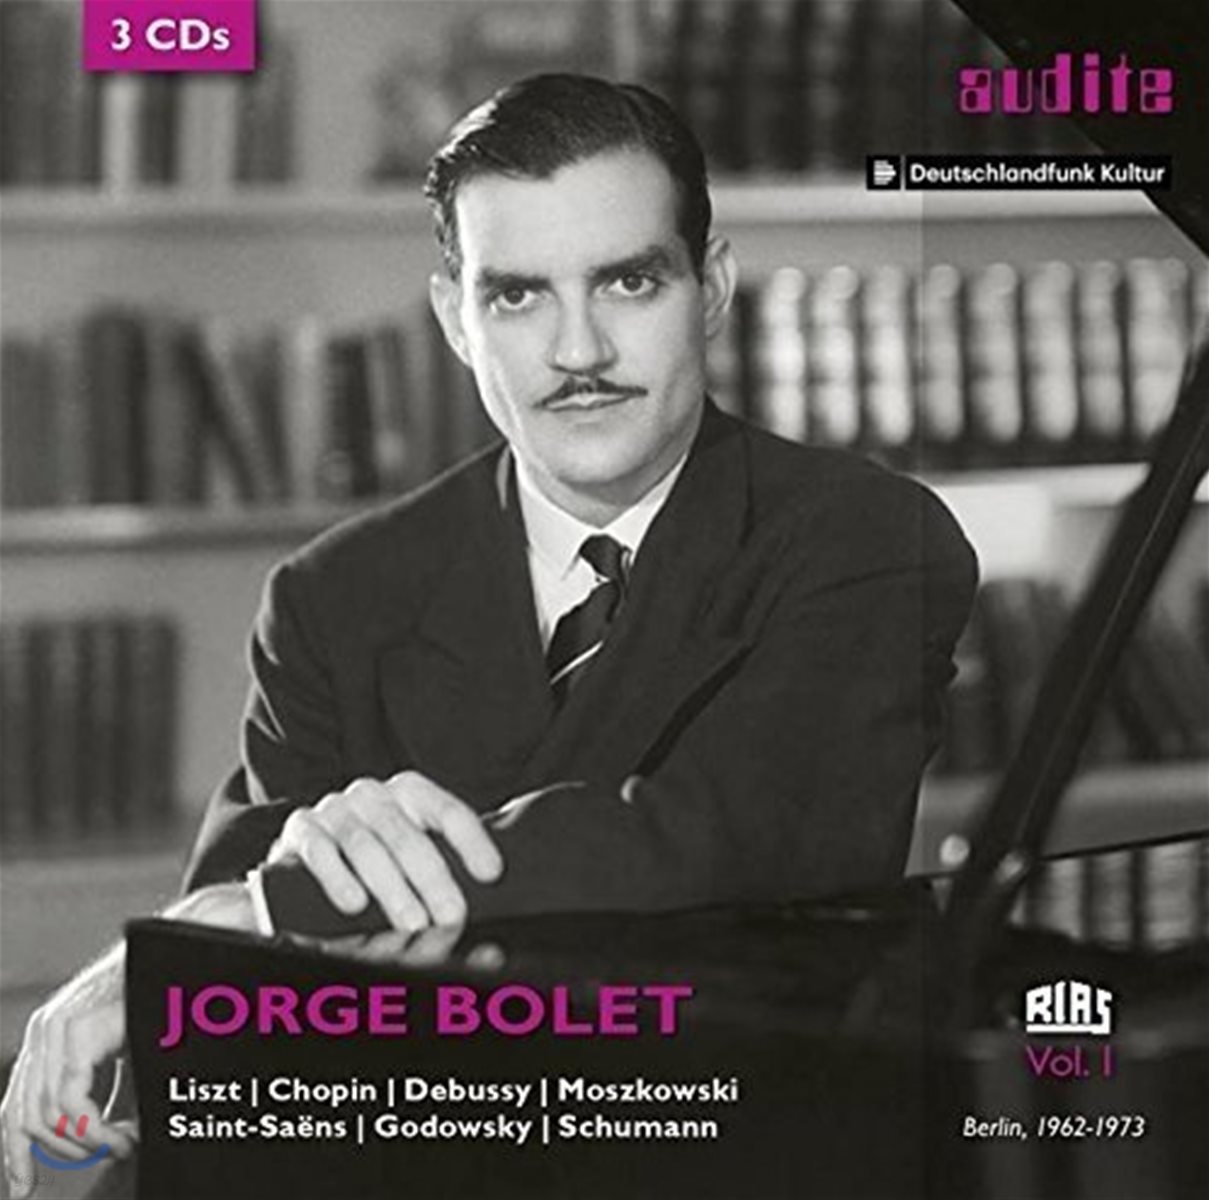 Jorge Bolet 호르헤 볼레 - RIAS 레코딩 1집: 리스트 / 쇼팽 / 드뷔시 / 생상스 외 (RIAS Recording Vol.1)